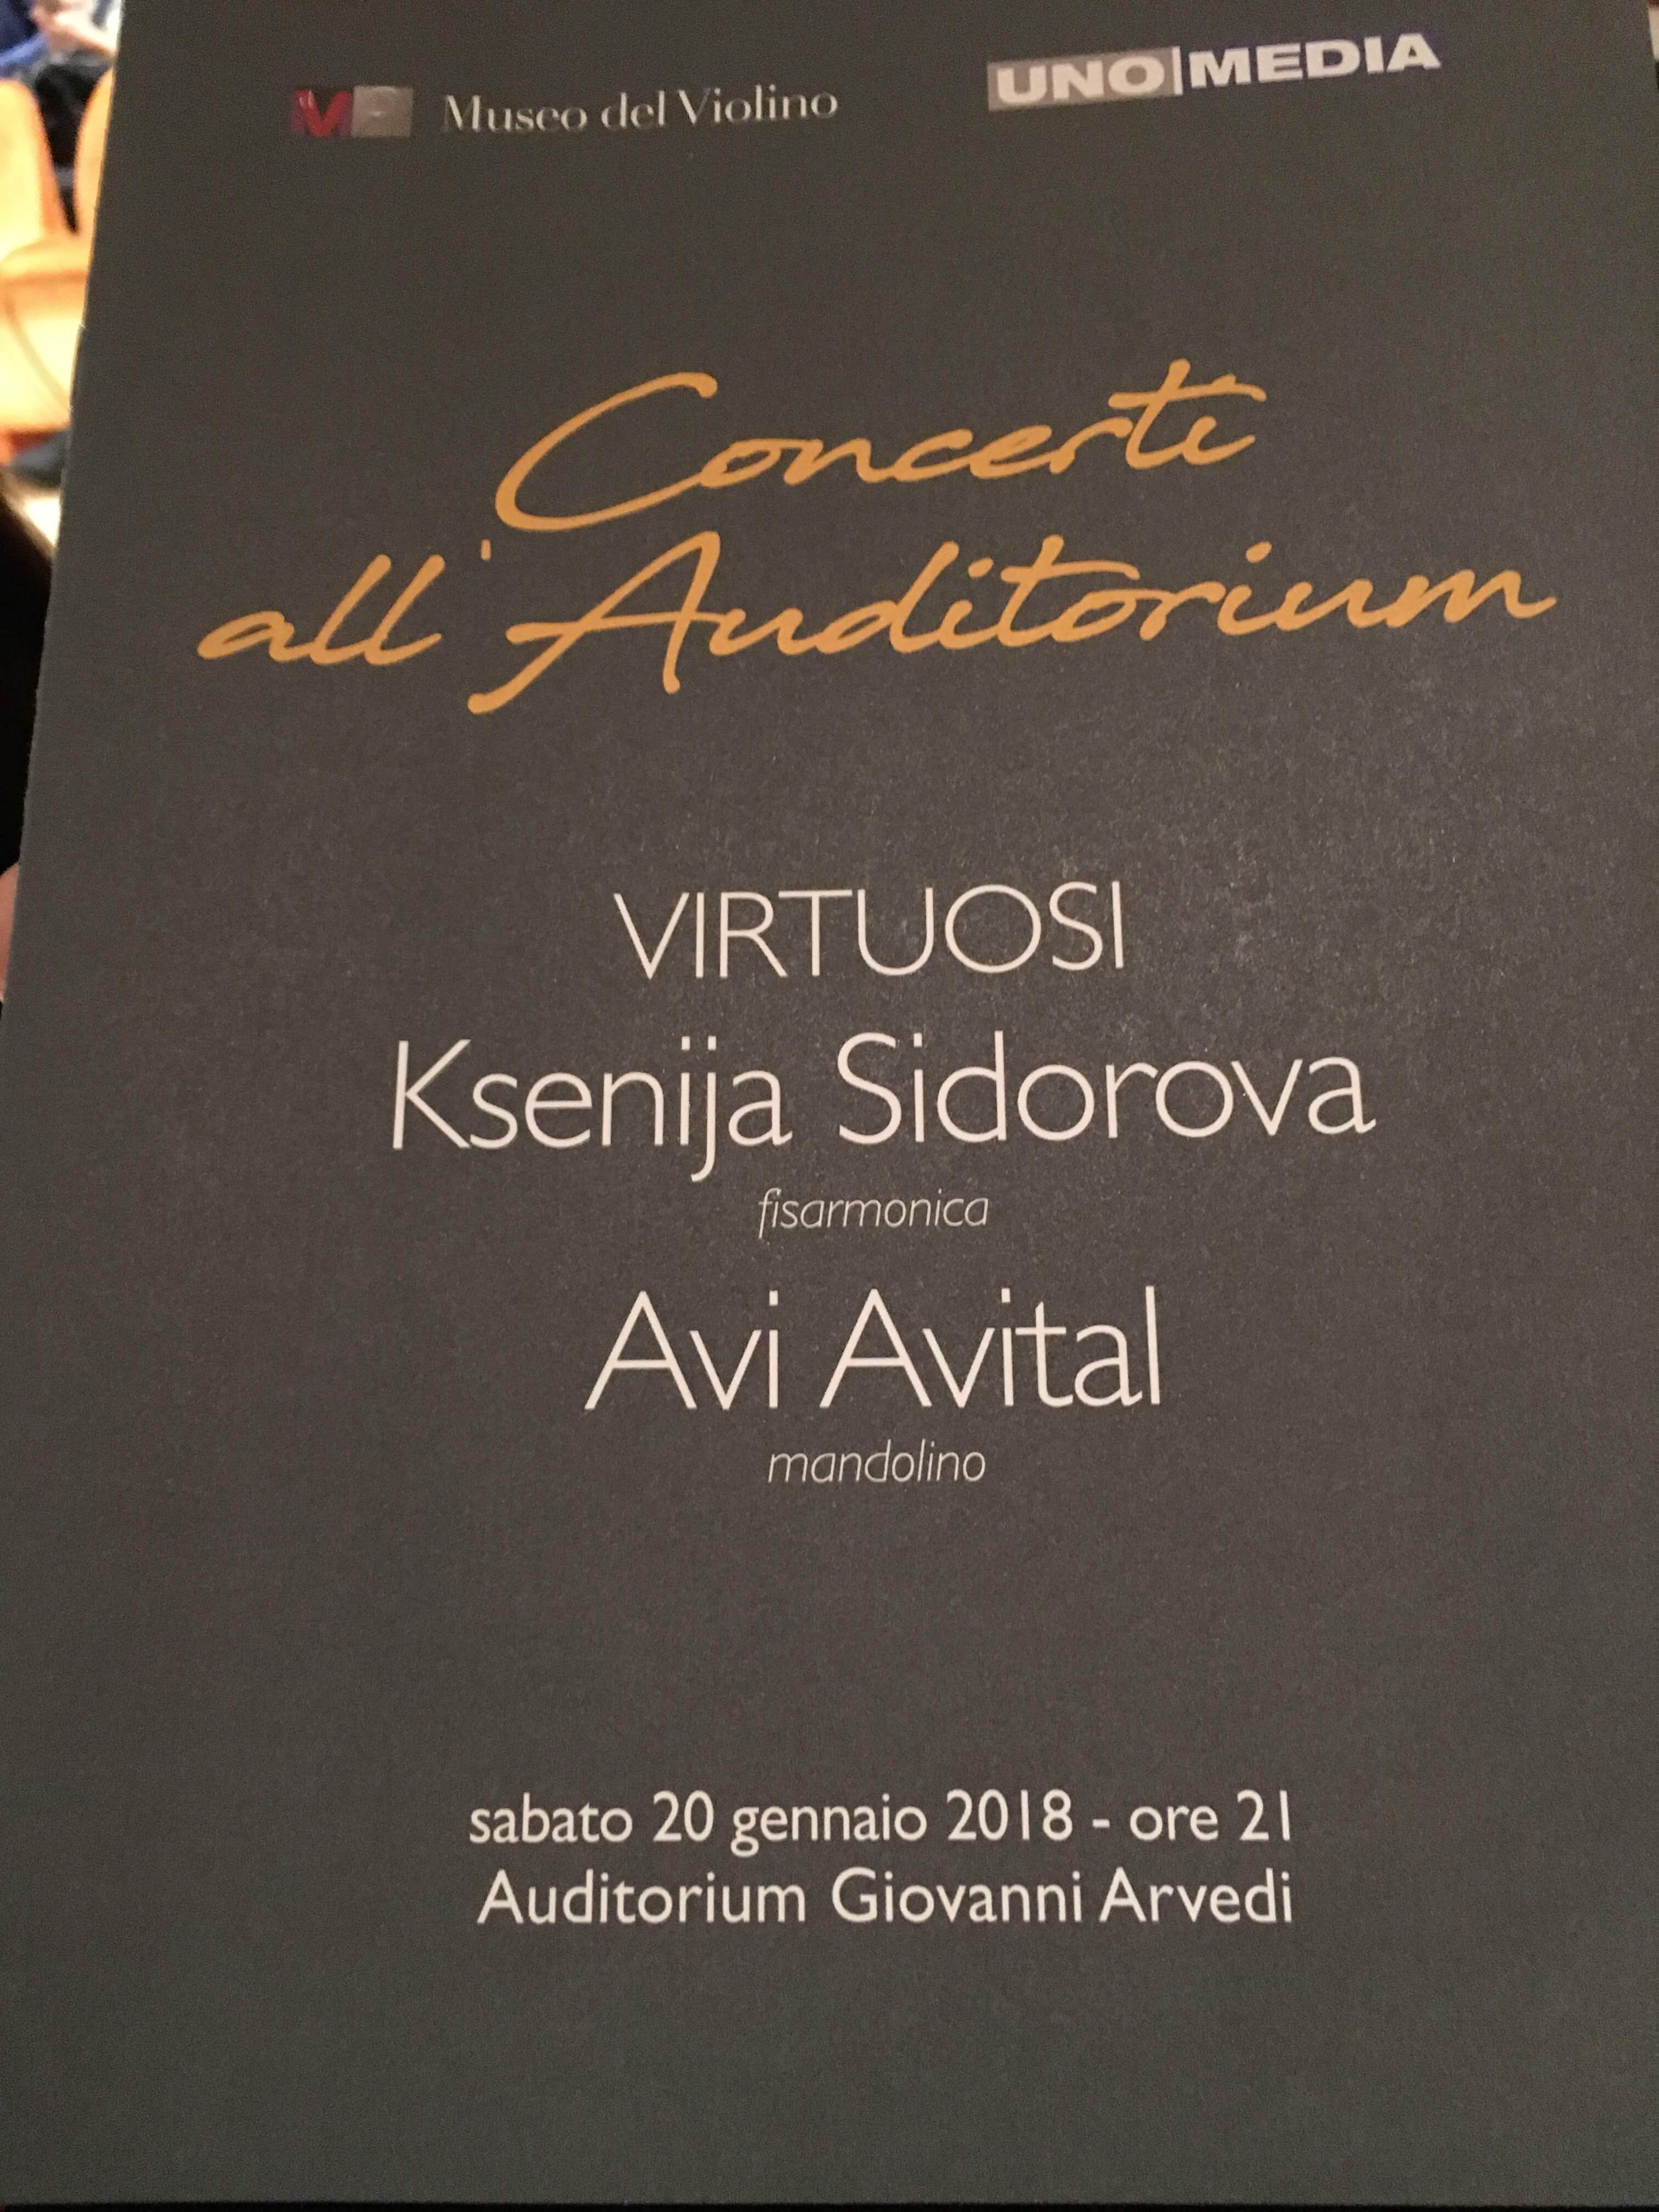 Anche Acciaitubi ai Concerti all’Auditorium di Cremona: Immagine 1